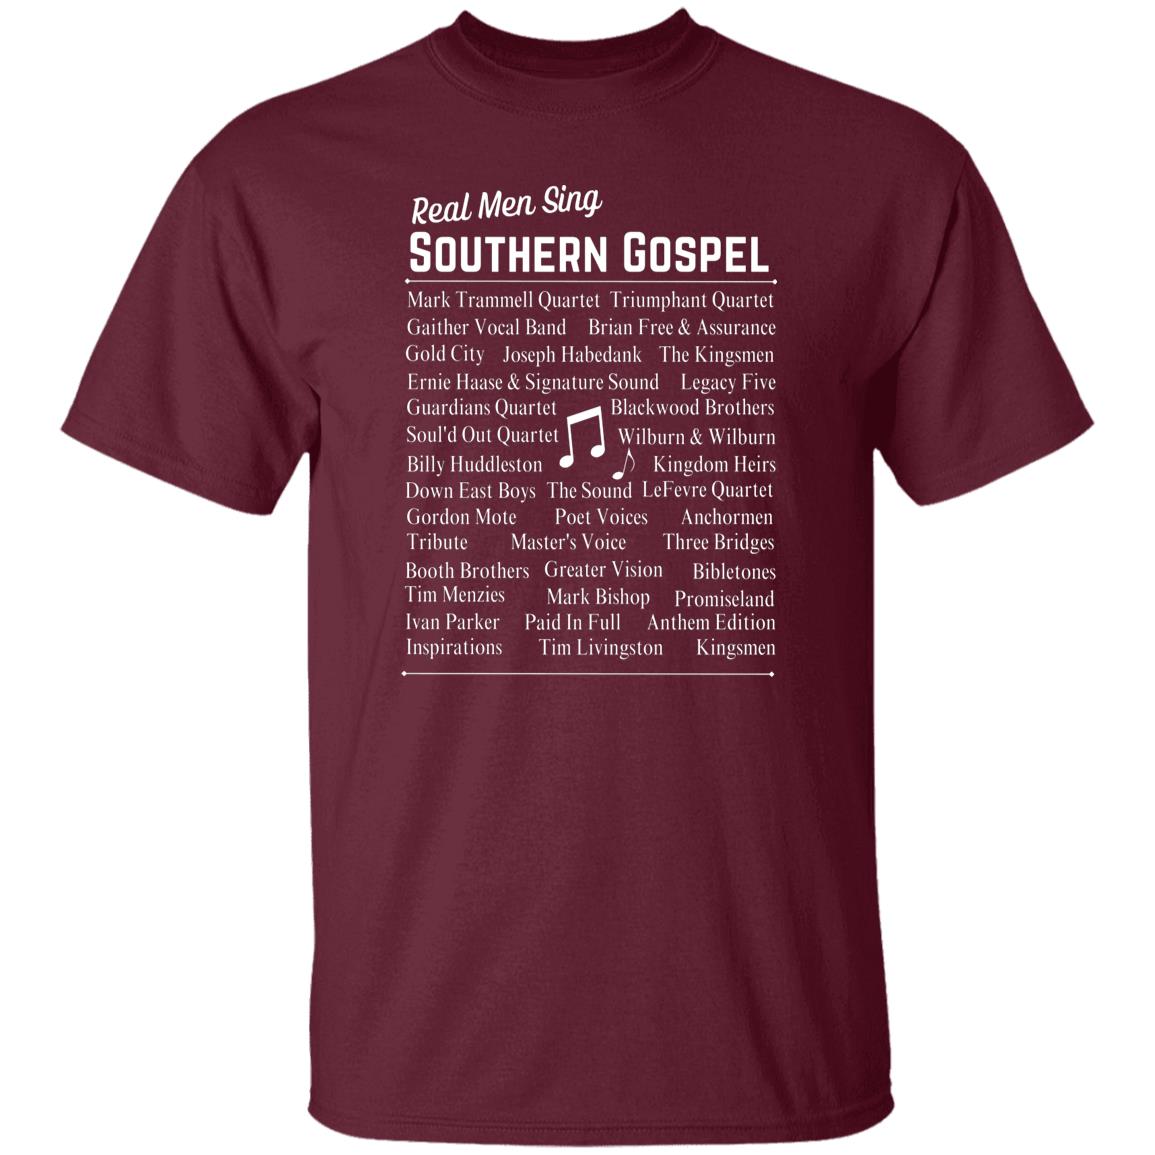 Real Men Sing Southern Gospel T-Shirt